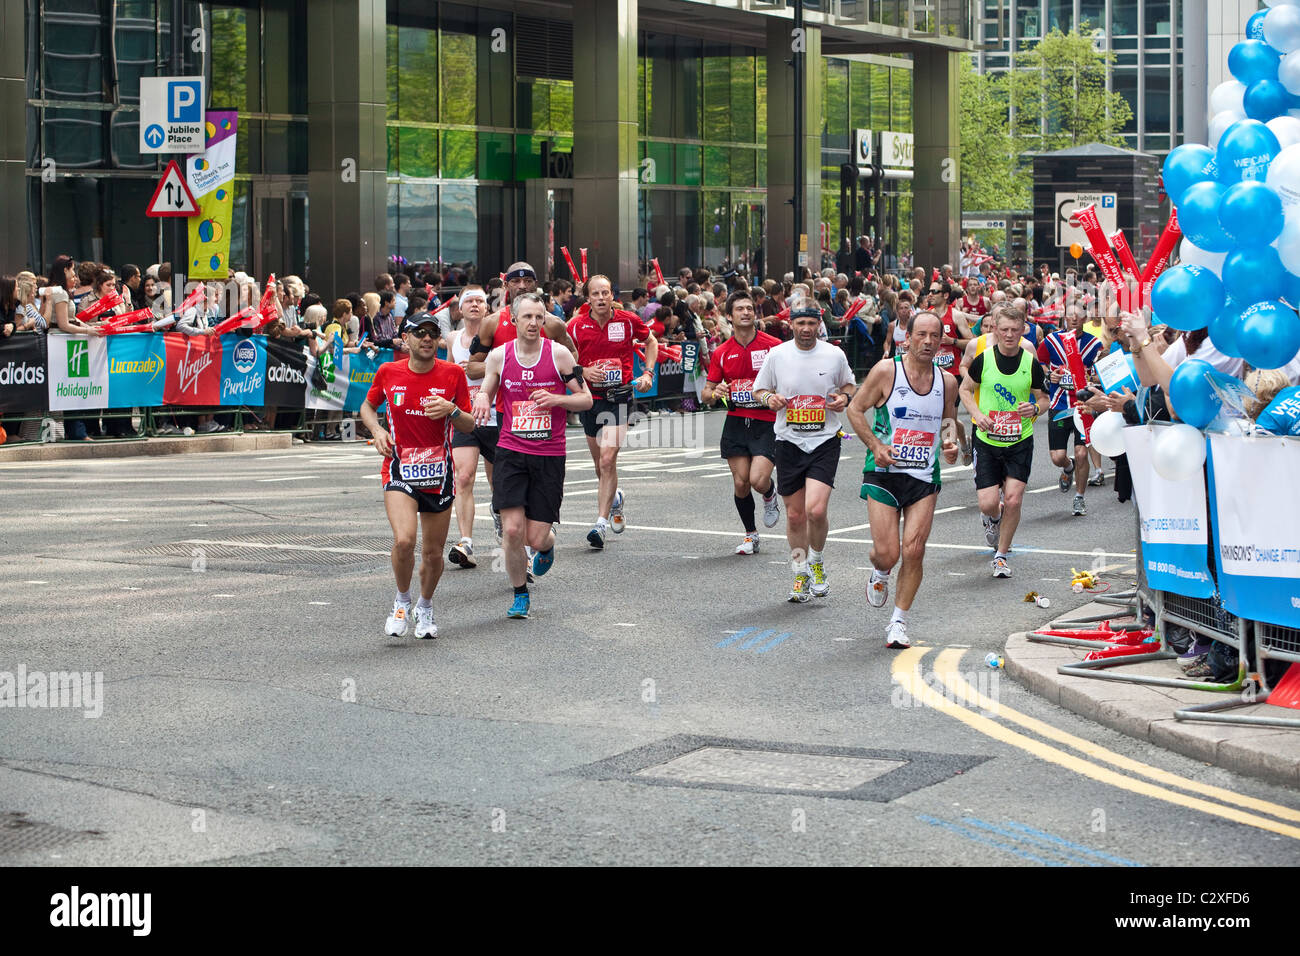 Fancy dress runners on the London Marathon 2011 at Canary Wharf, Docklands, London, England, United Kingdom. Stock Photo